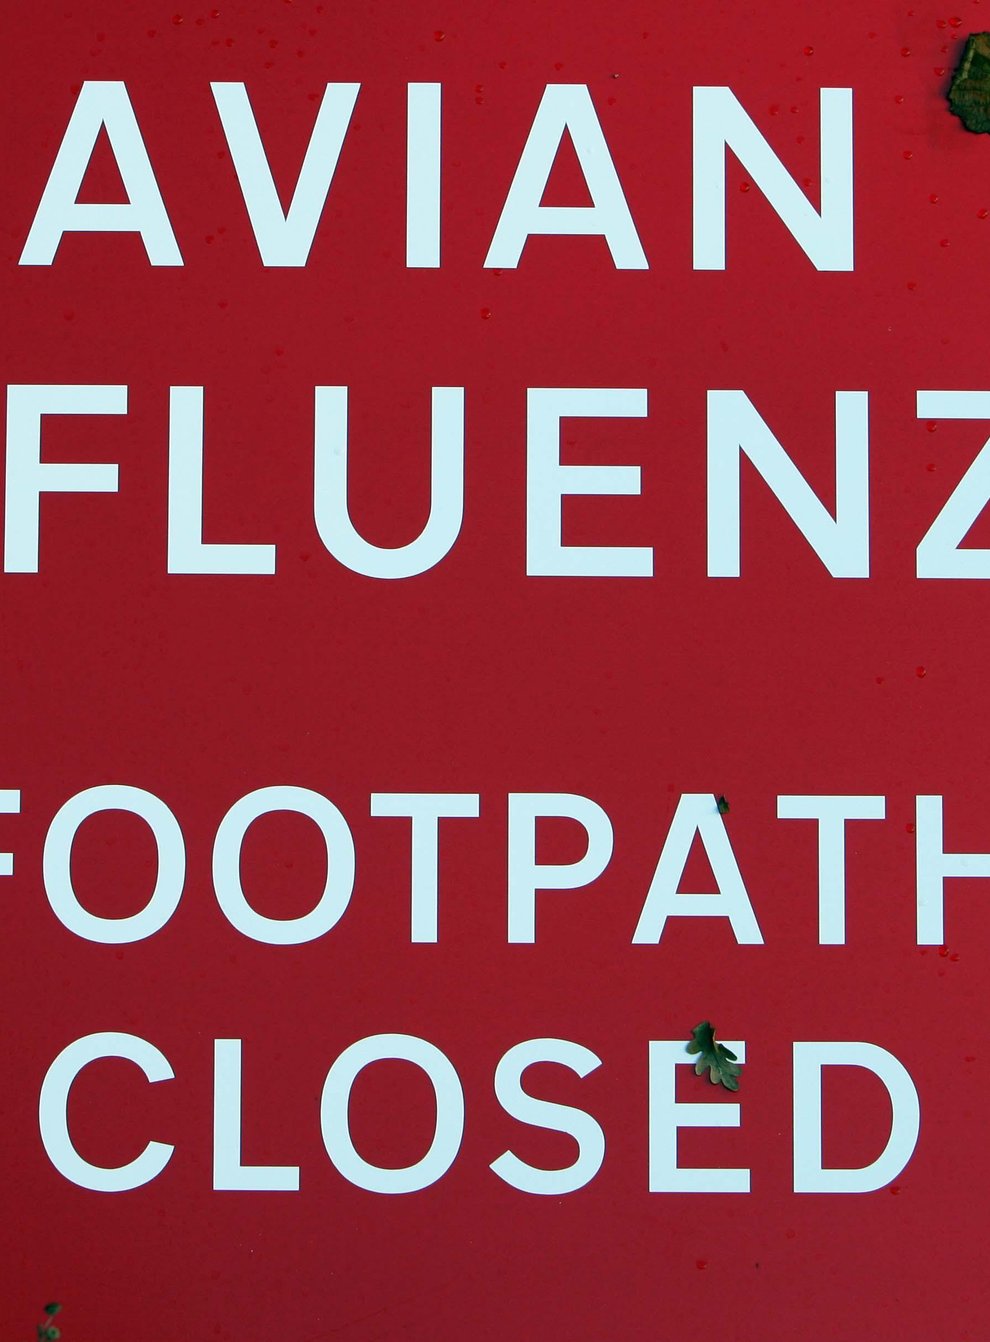 An 'Avian influenza. Footpath closed' sign